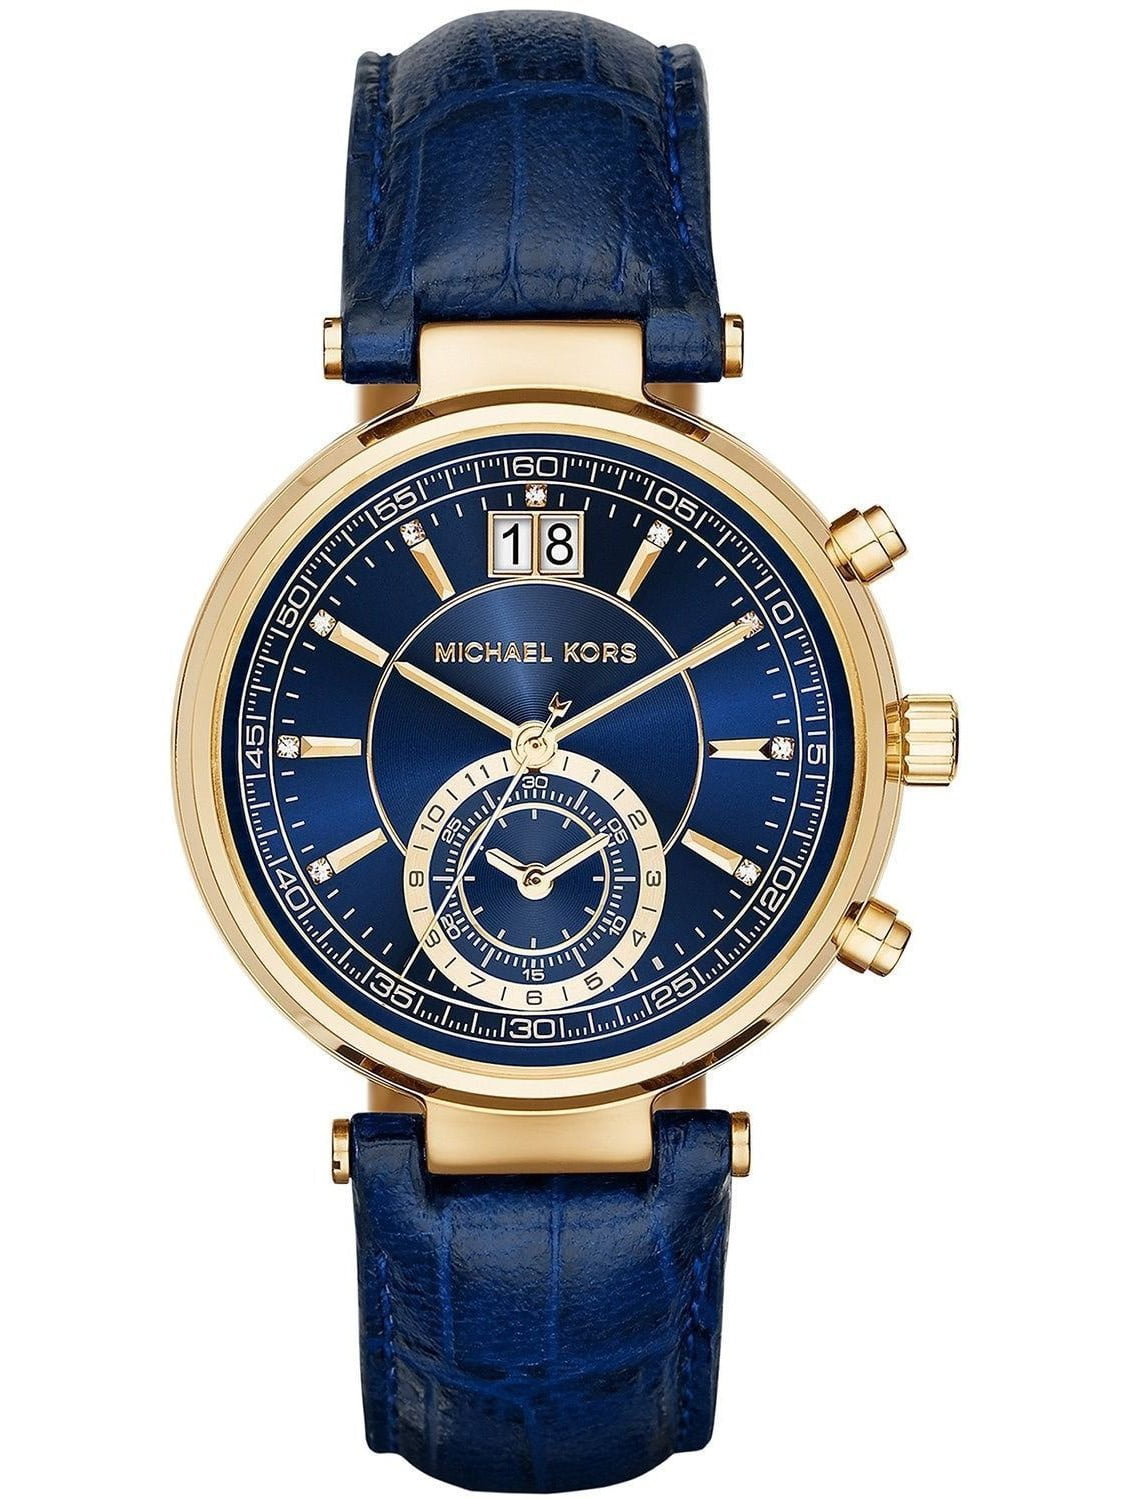 Michael Kors Women's MK2425 Blue Leather Swiss Chronograph Fashion Watch